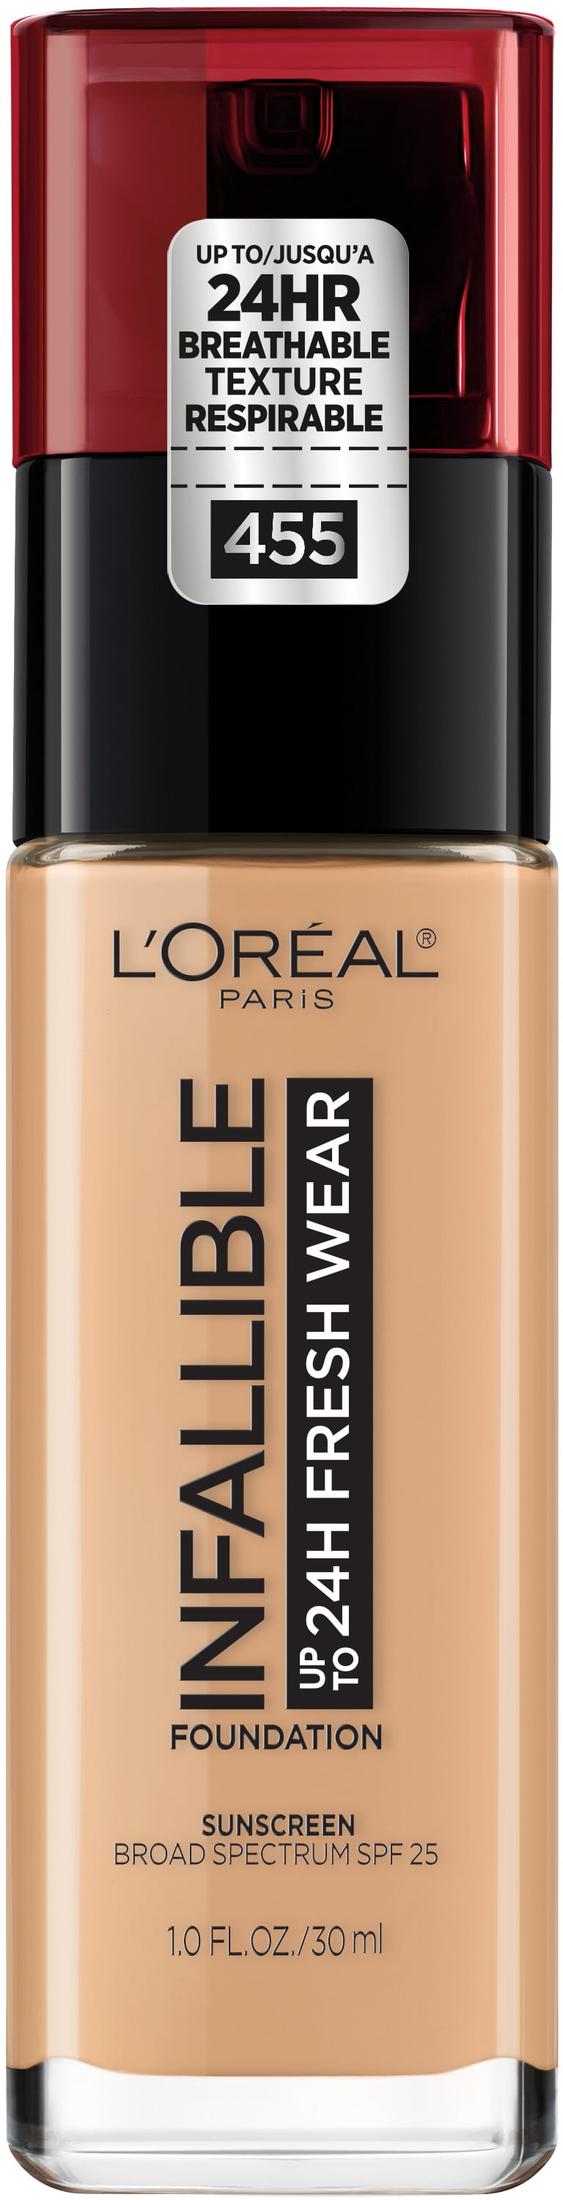 L'Oreal Paris Infallible Fresh Wear 24 Hr Liquid Foundation Makeup, 455 Natural Buff, 1 fl oz - image 1 of 12